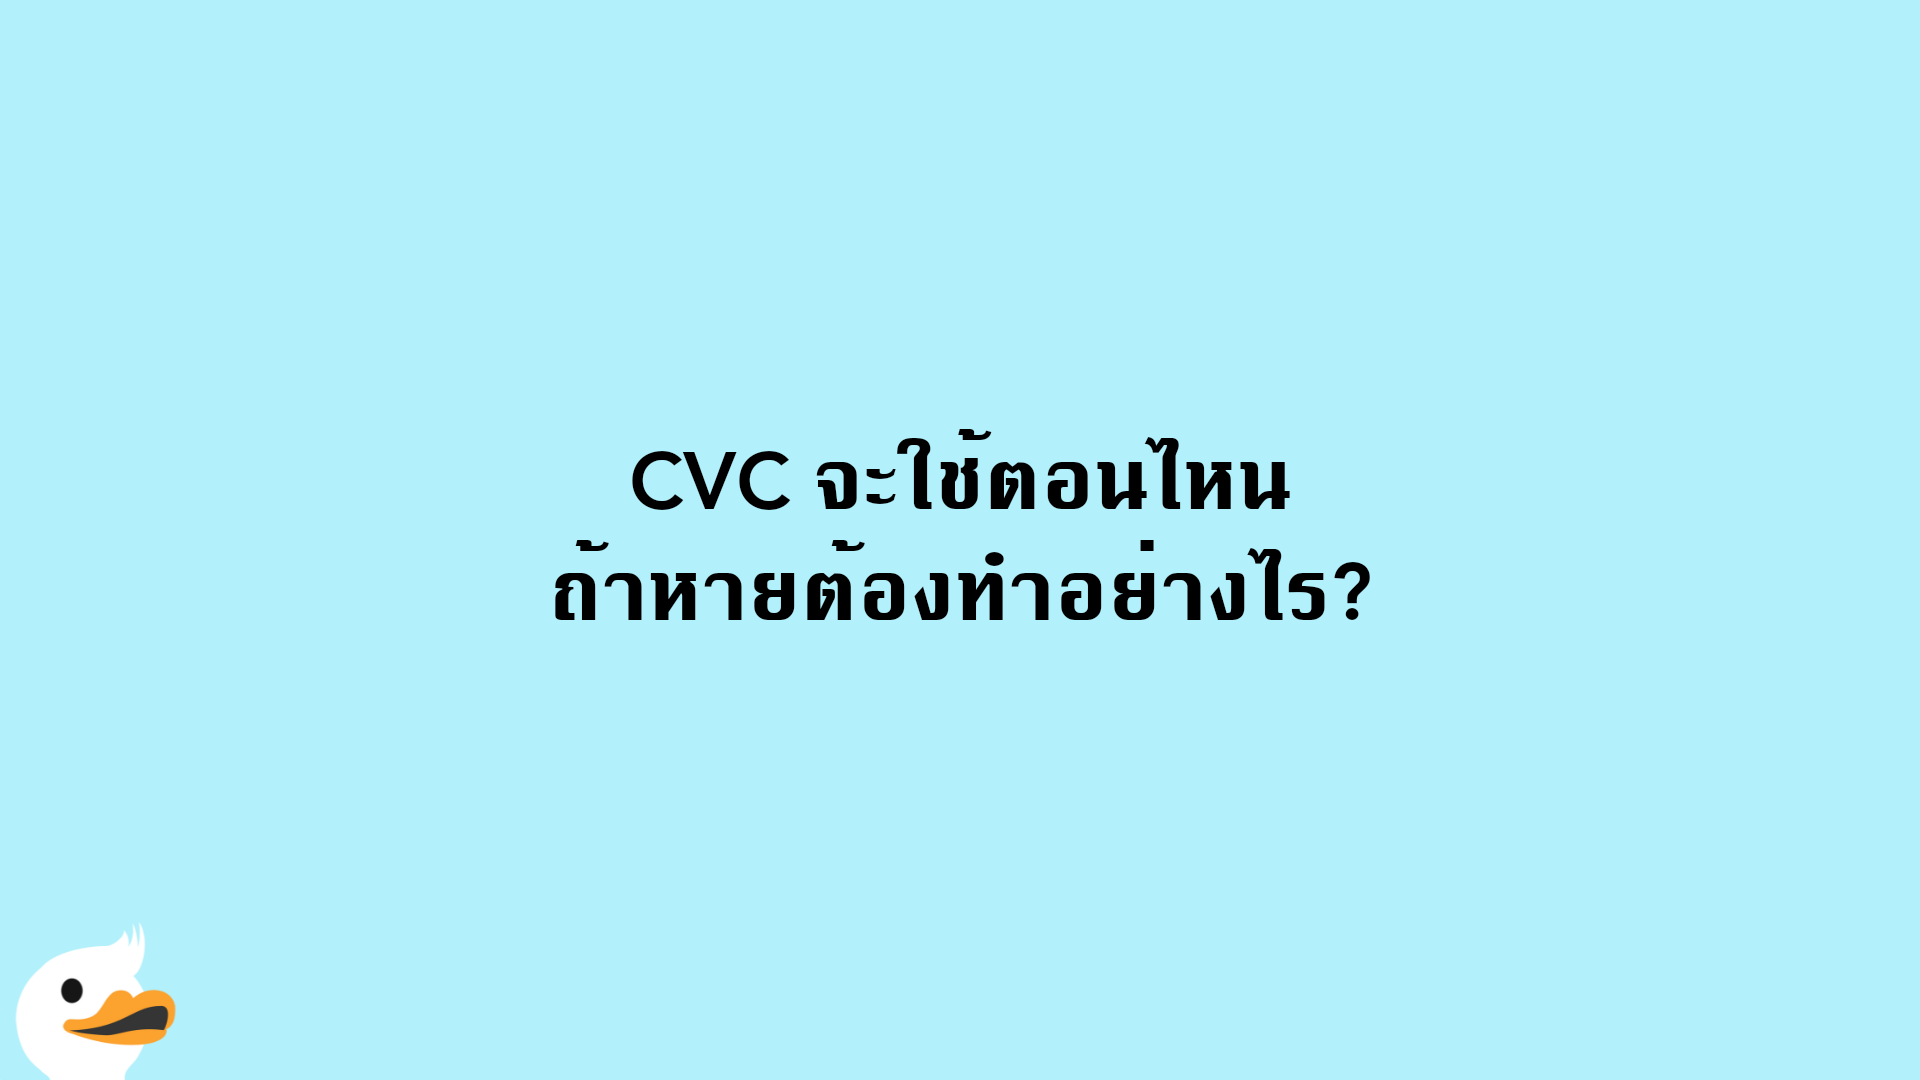 CVC จะใช้ตอนไหน ถ้าหายต้องทำอย่างไร?